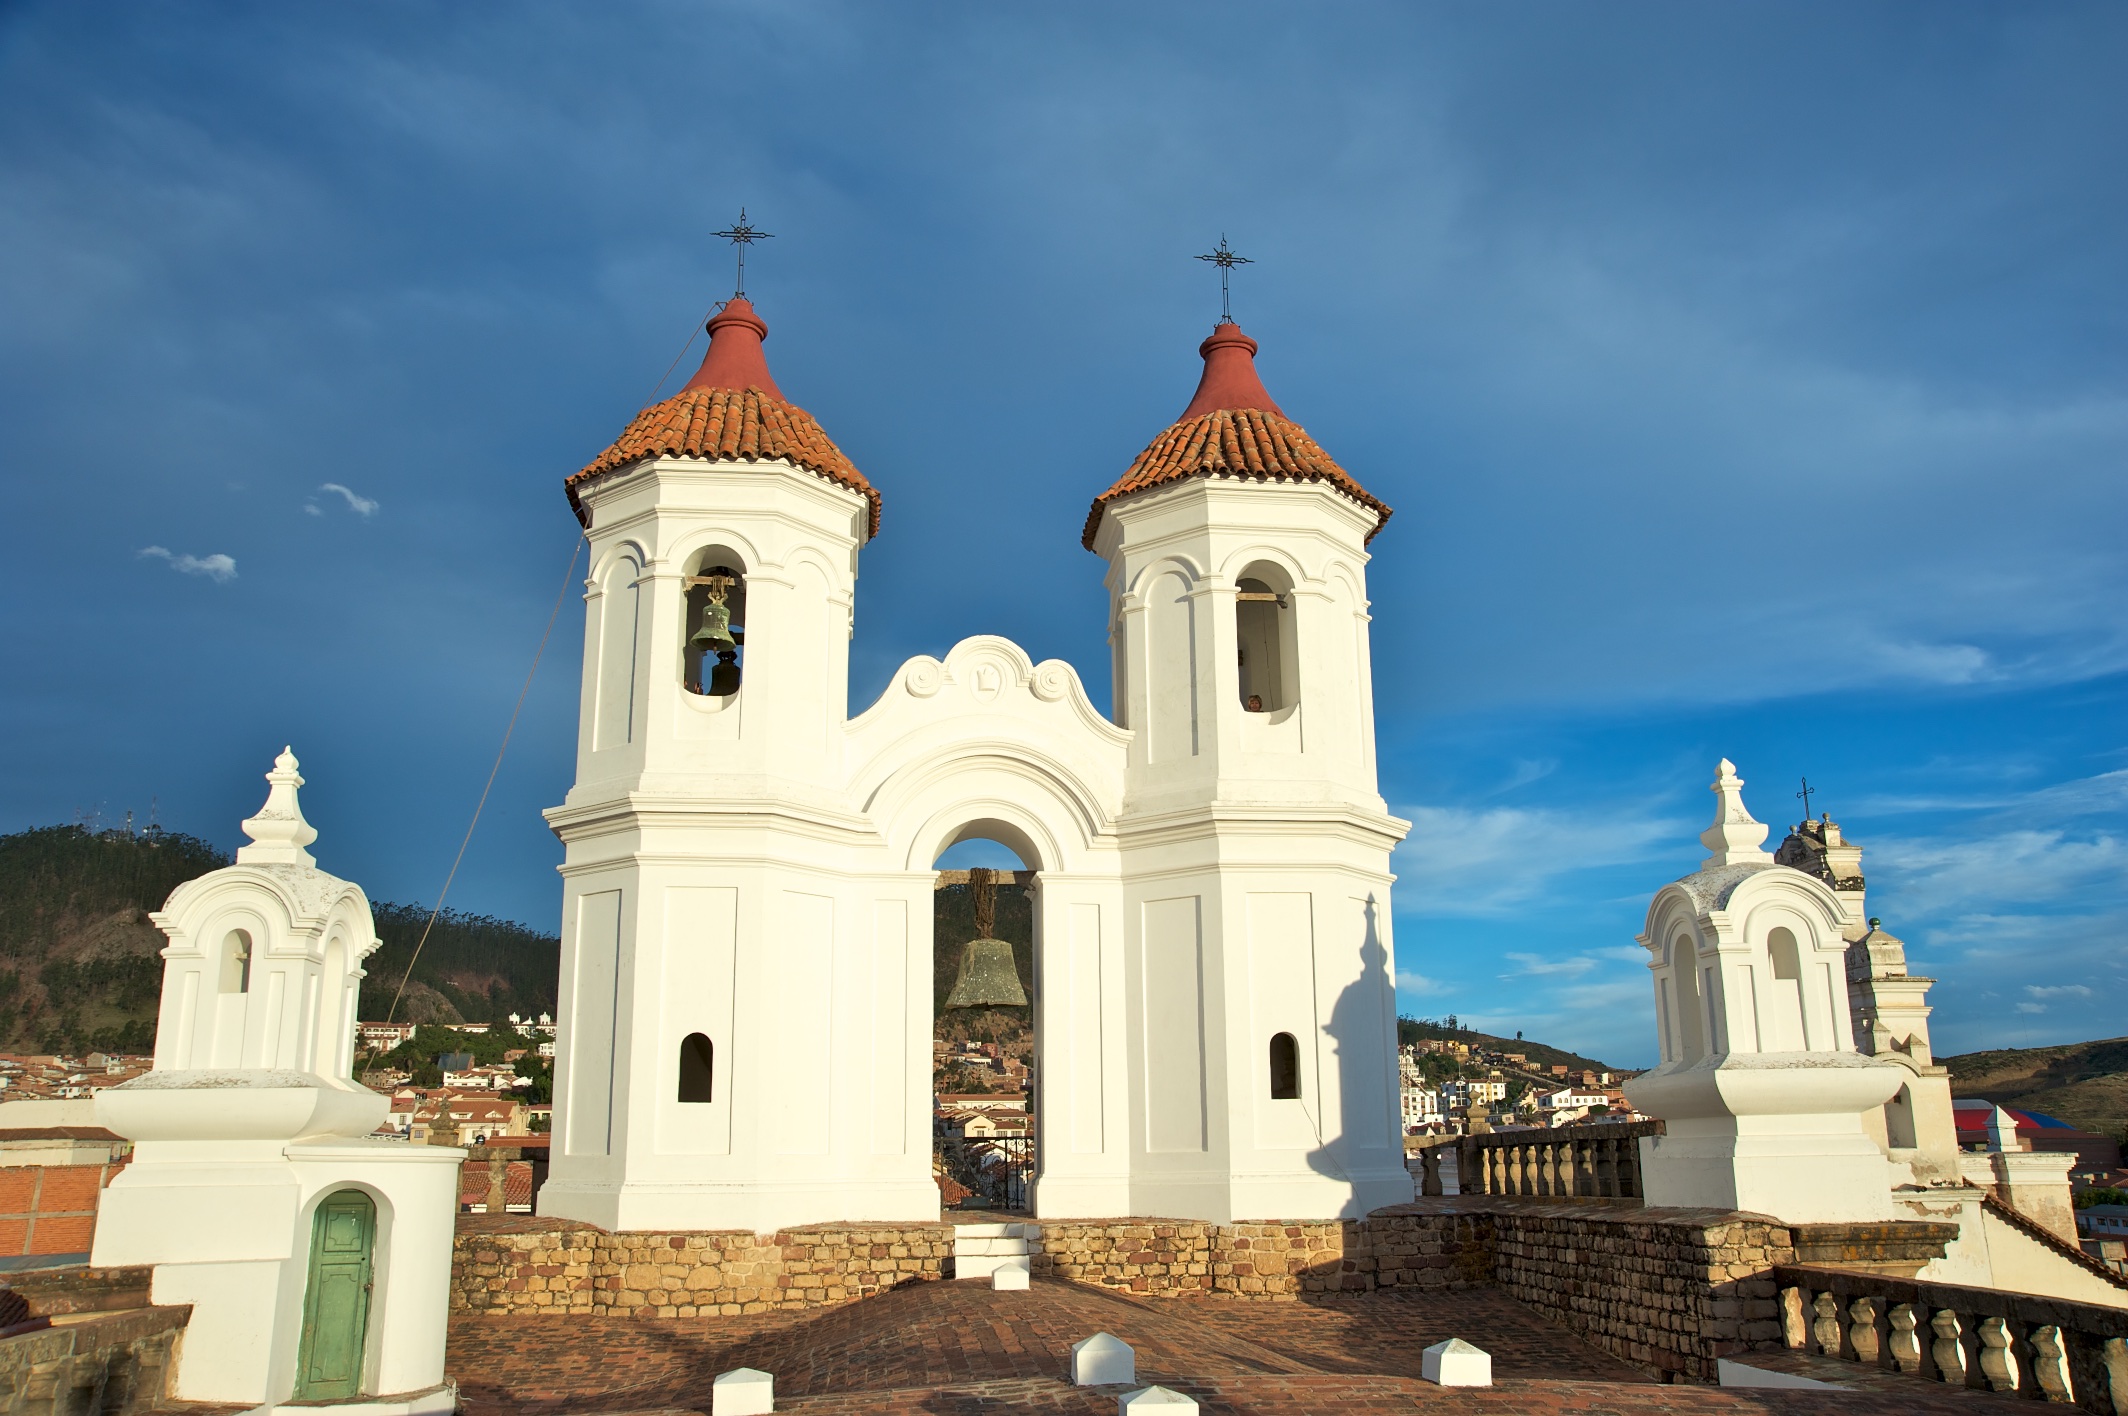  Bell towers, San Felipe Neri Monastry, Sucre, Bolivia 